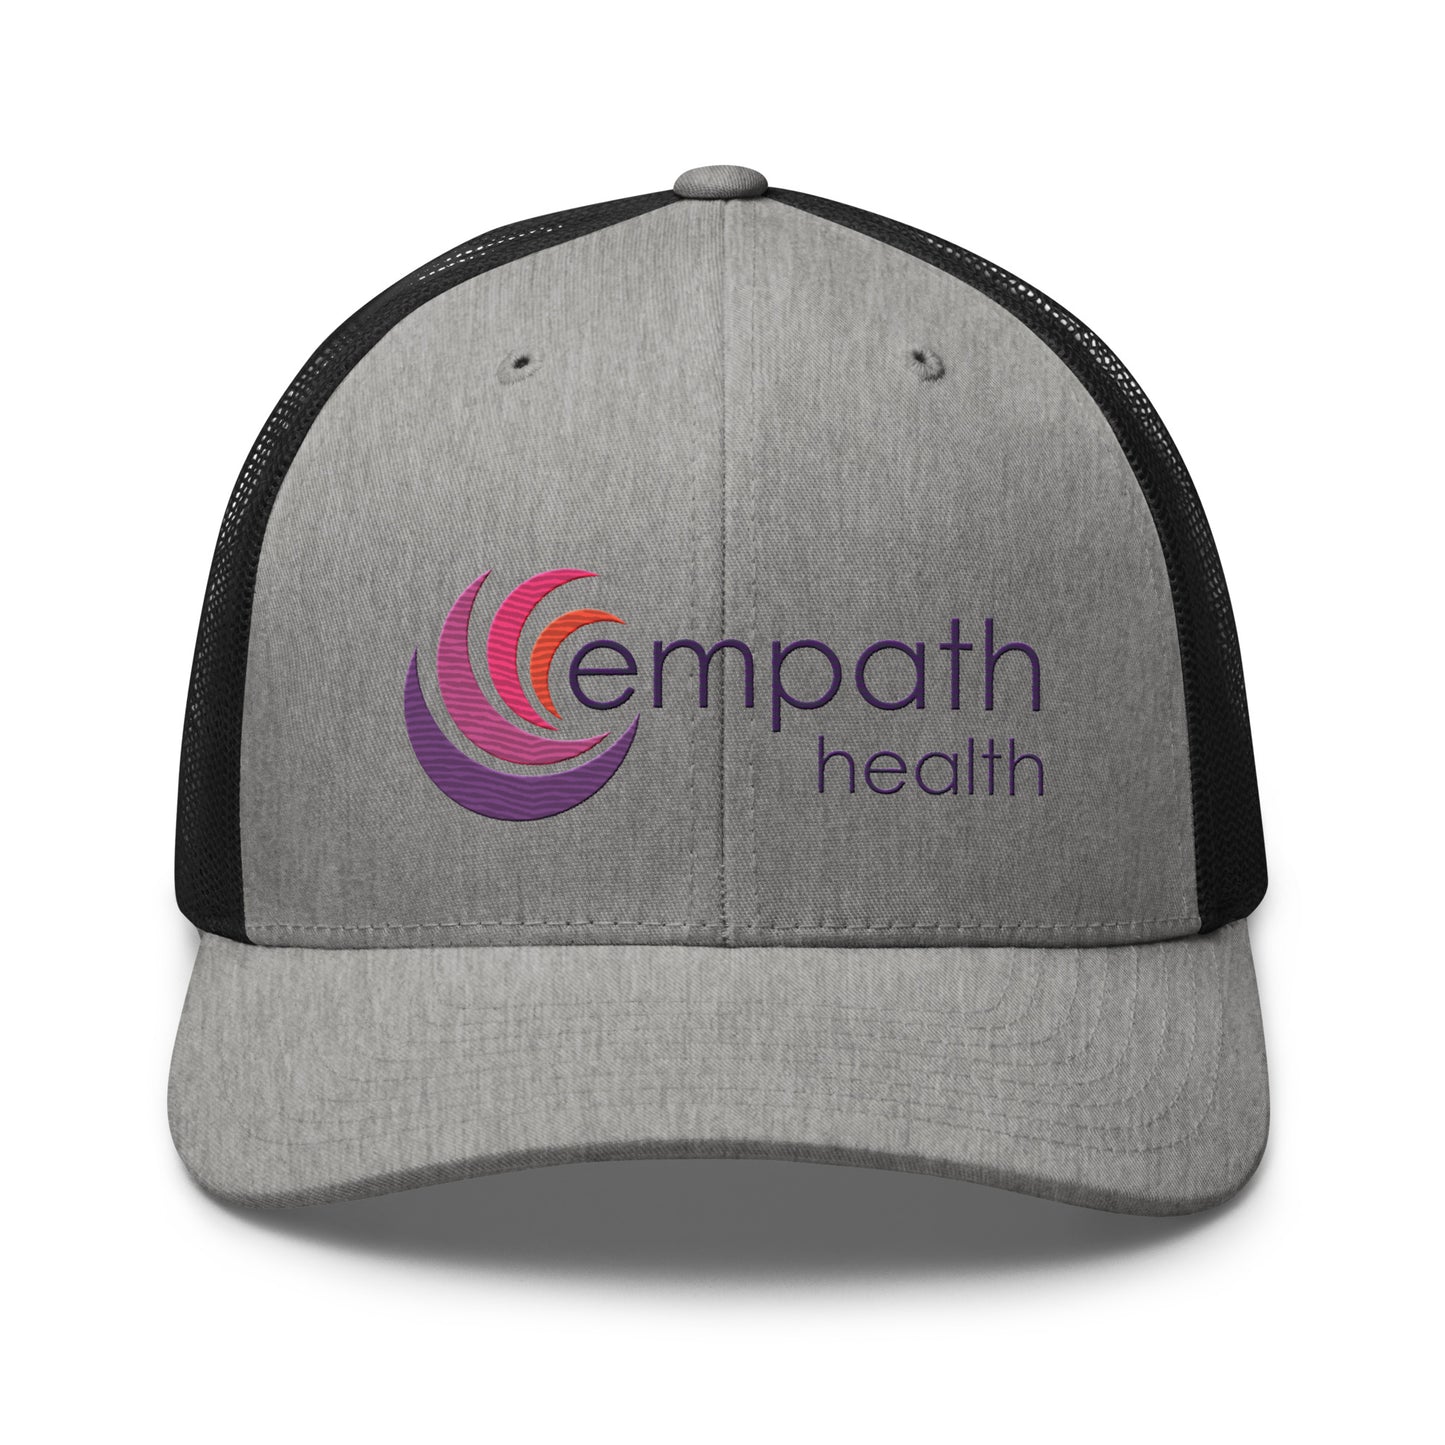 Trucker Cap - Empath Health